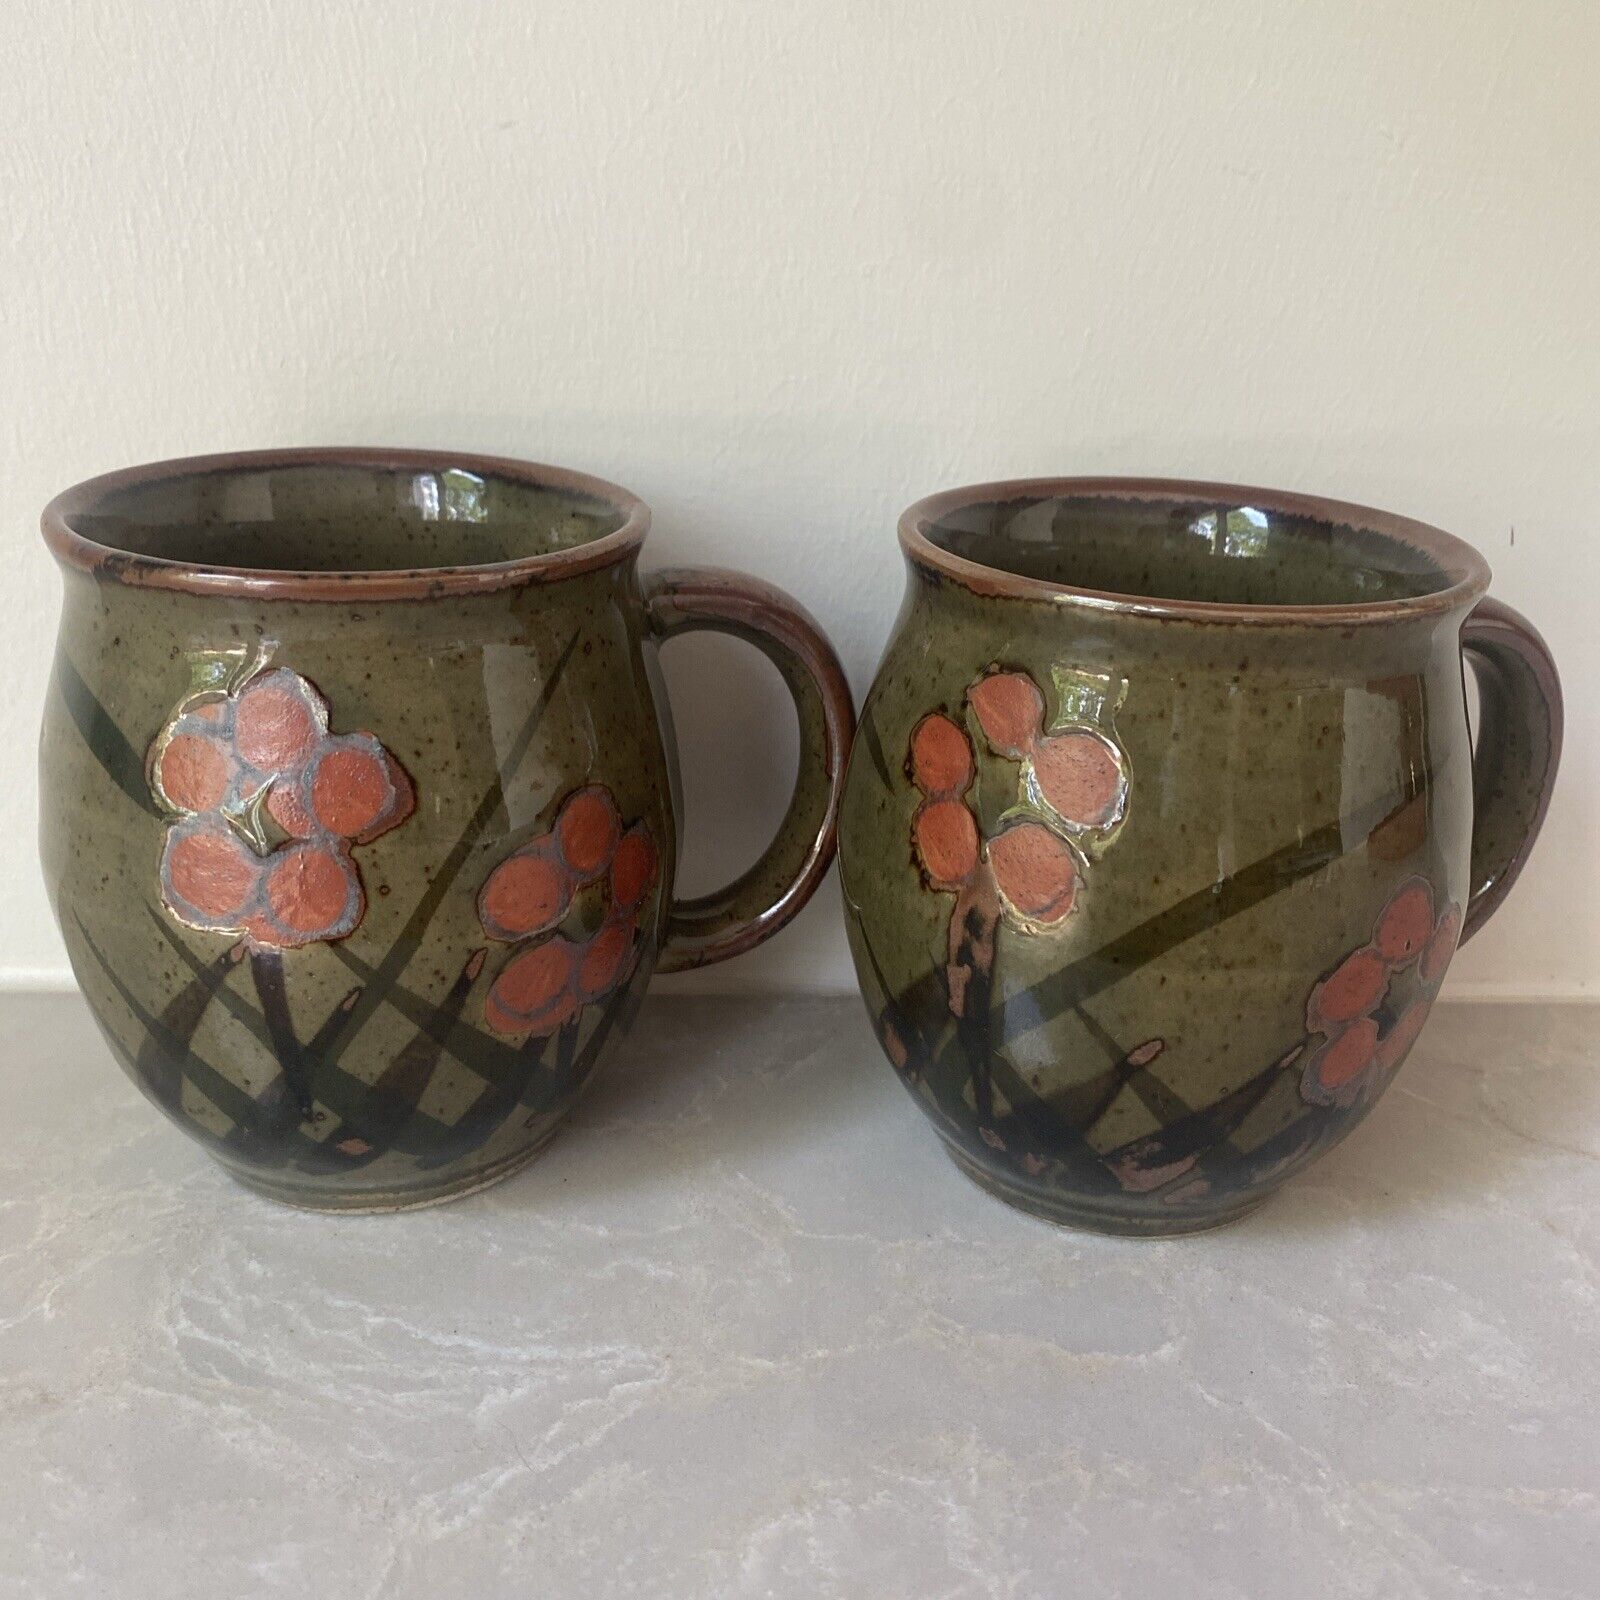 Japan Stoneware Round Green Flower Coffee Mugs Tea Cups Vintage 70’s~ Set of 2